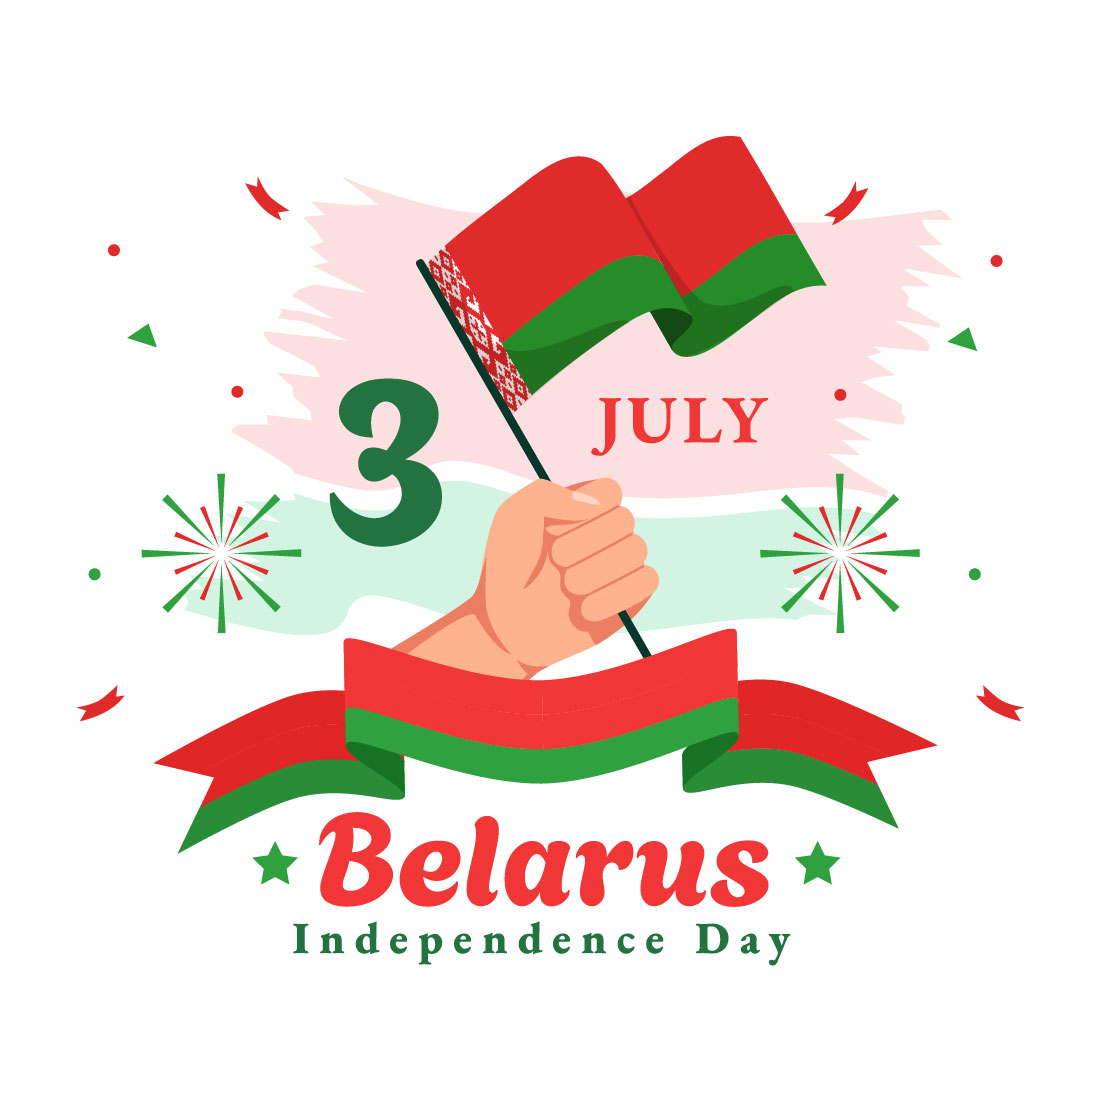 12 Belarus Independence Day Illustration preview image.